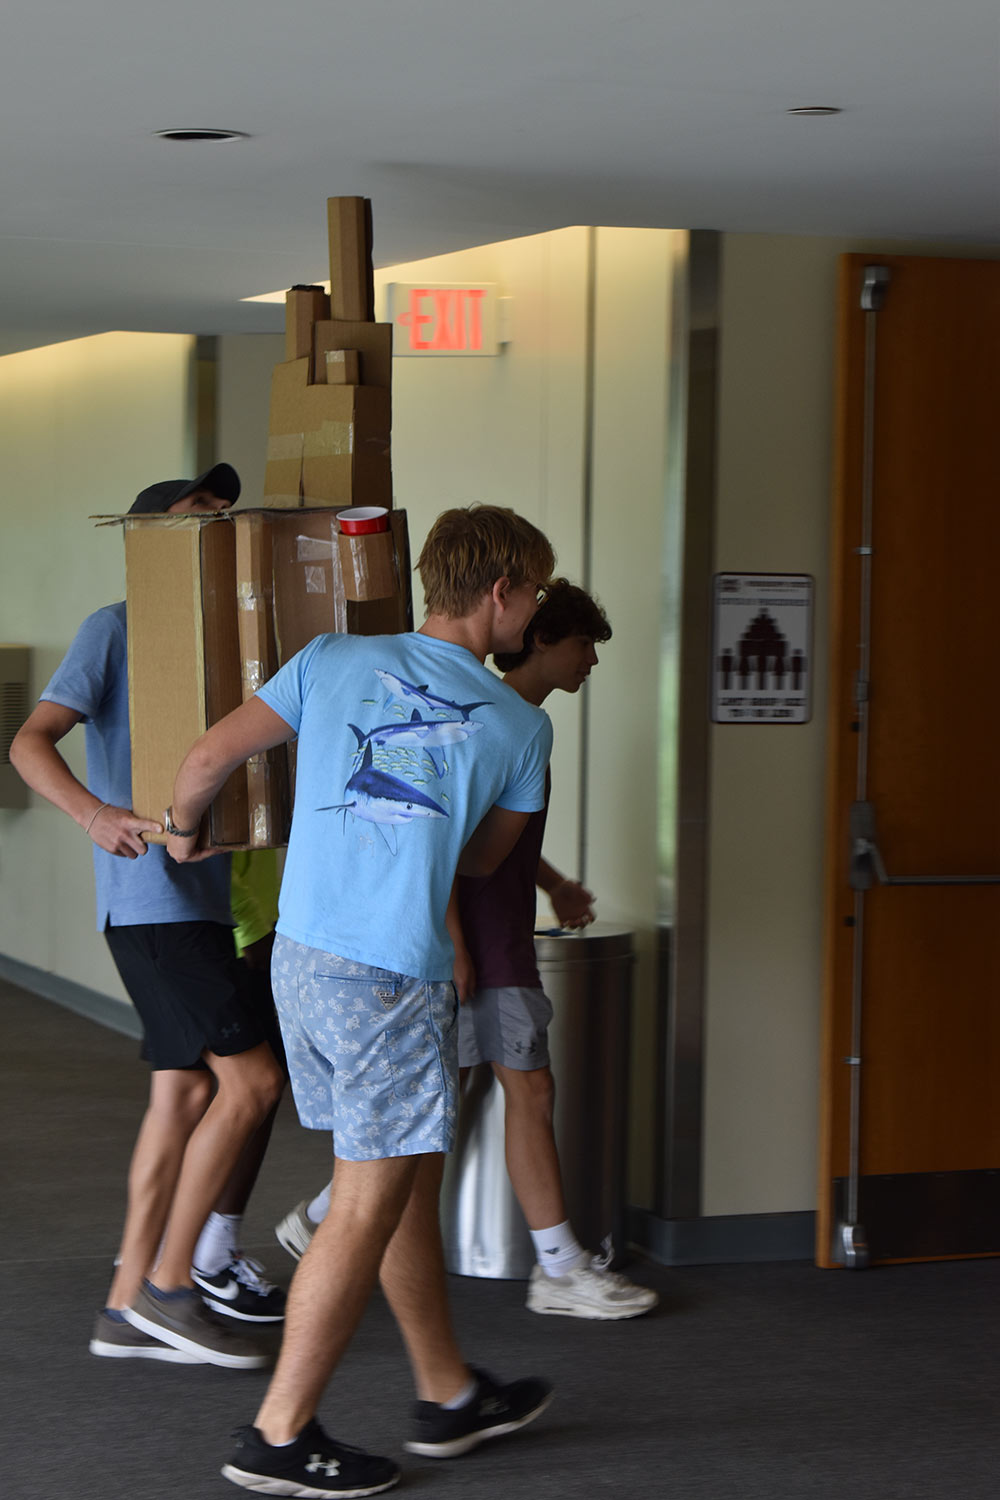 team carries their cardboard lounge device